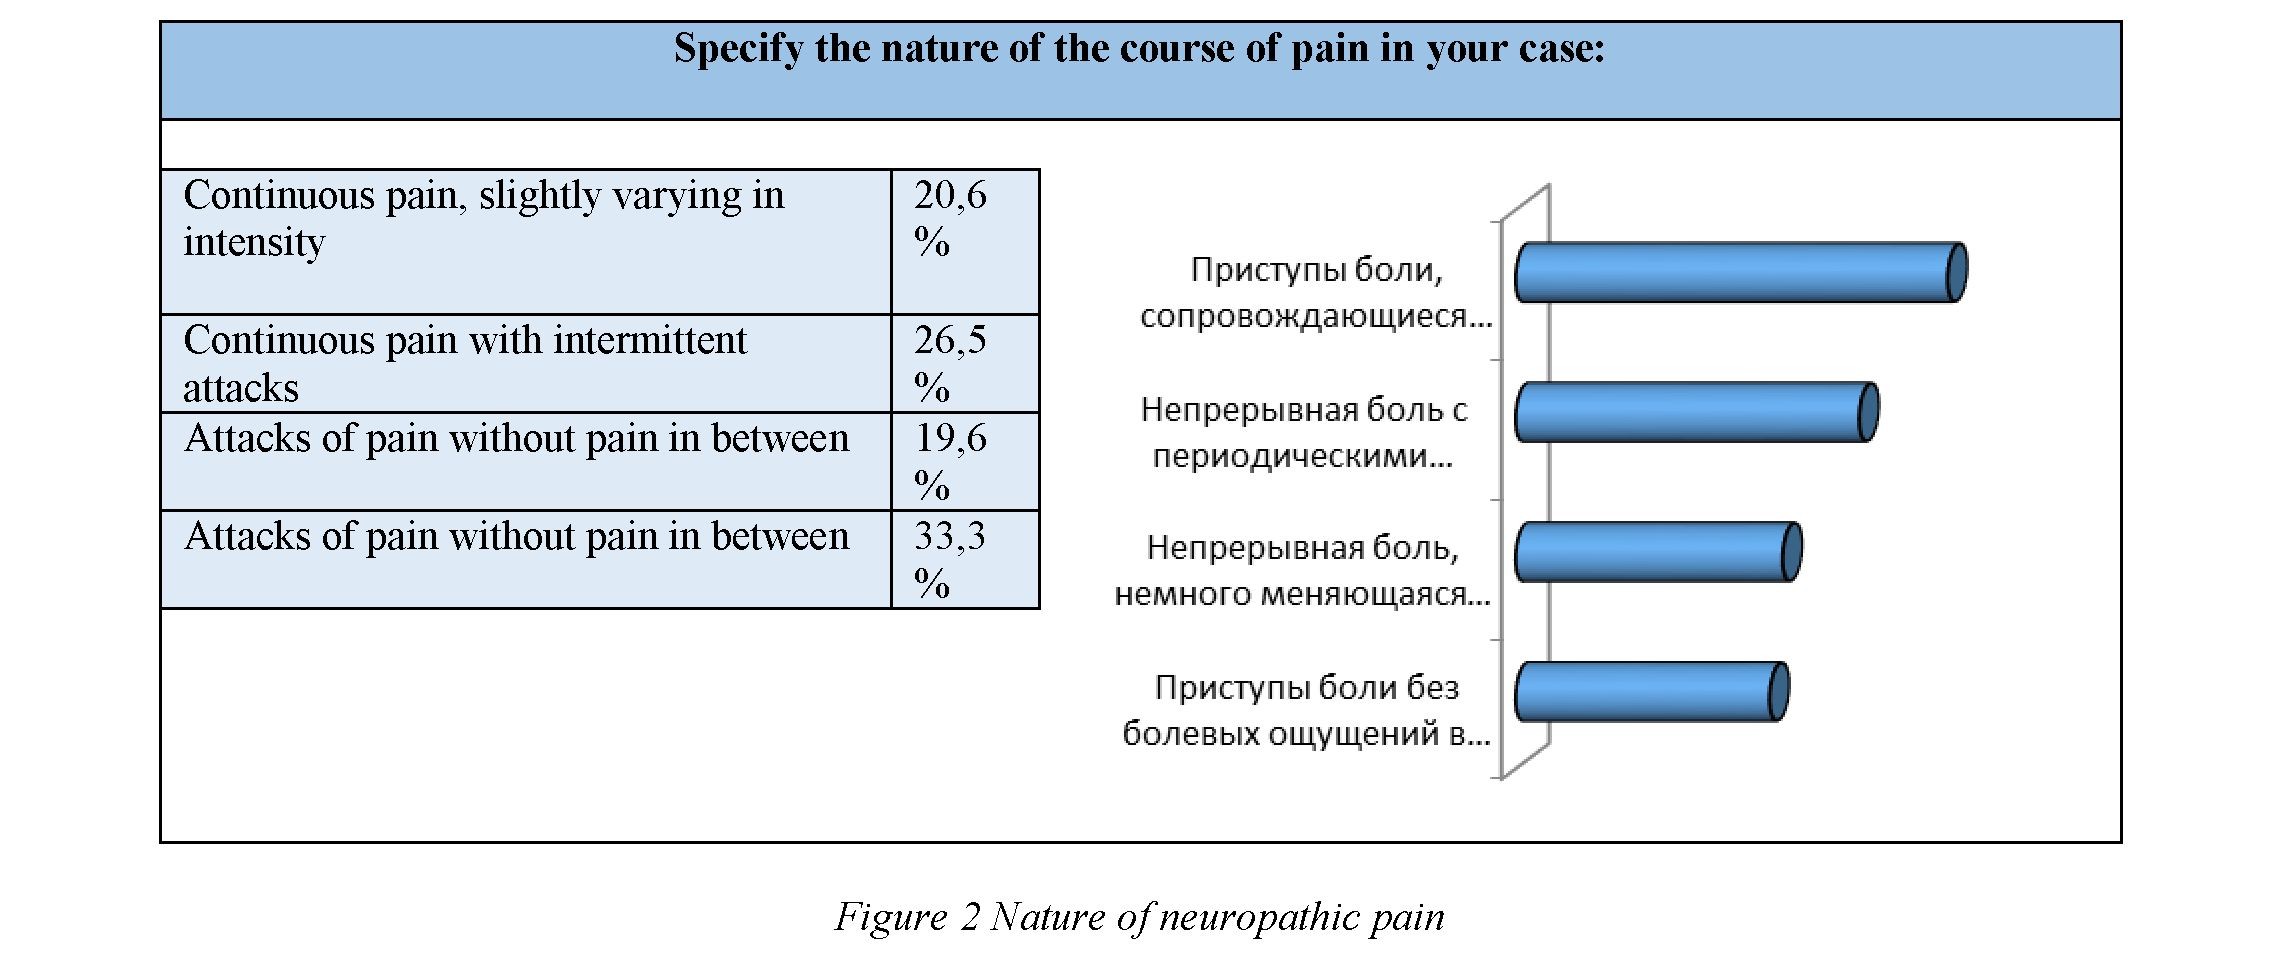 Intensity of neuropathic pain